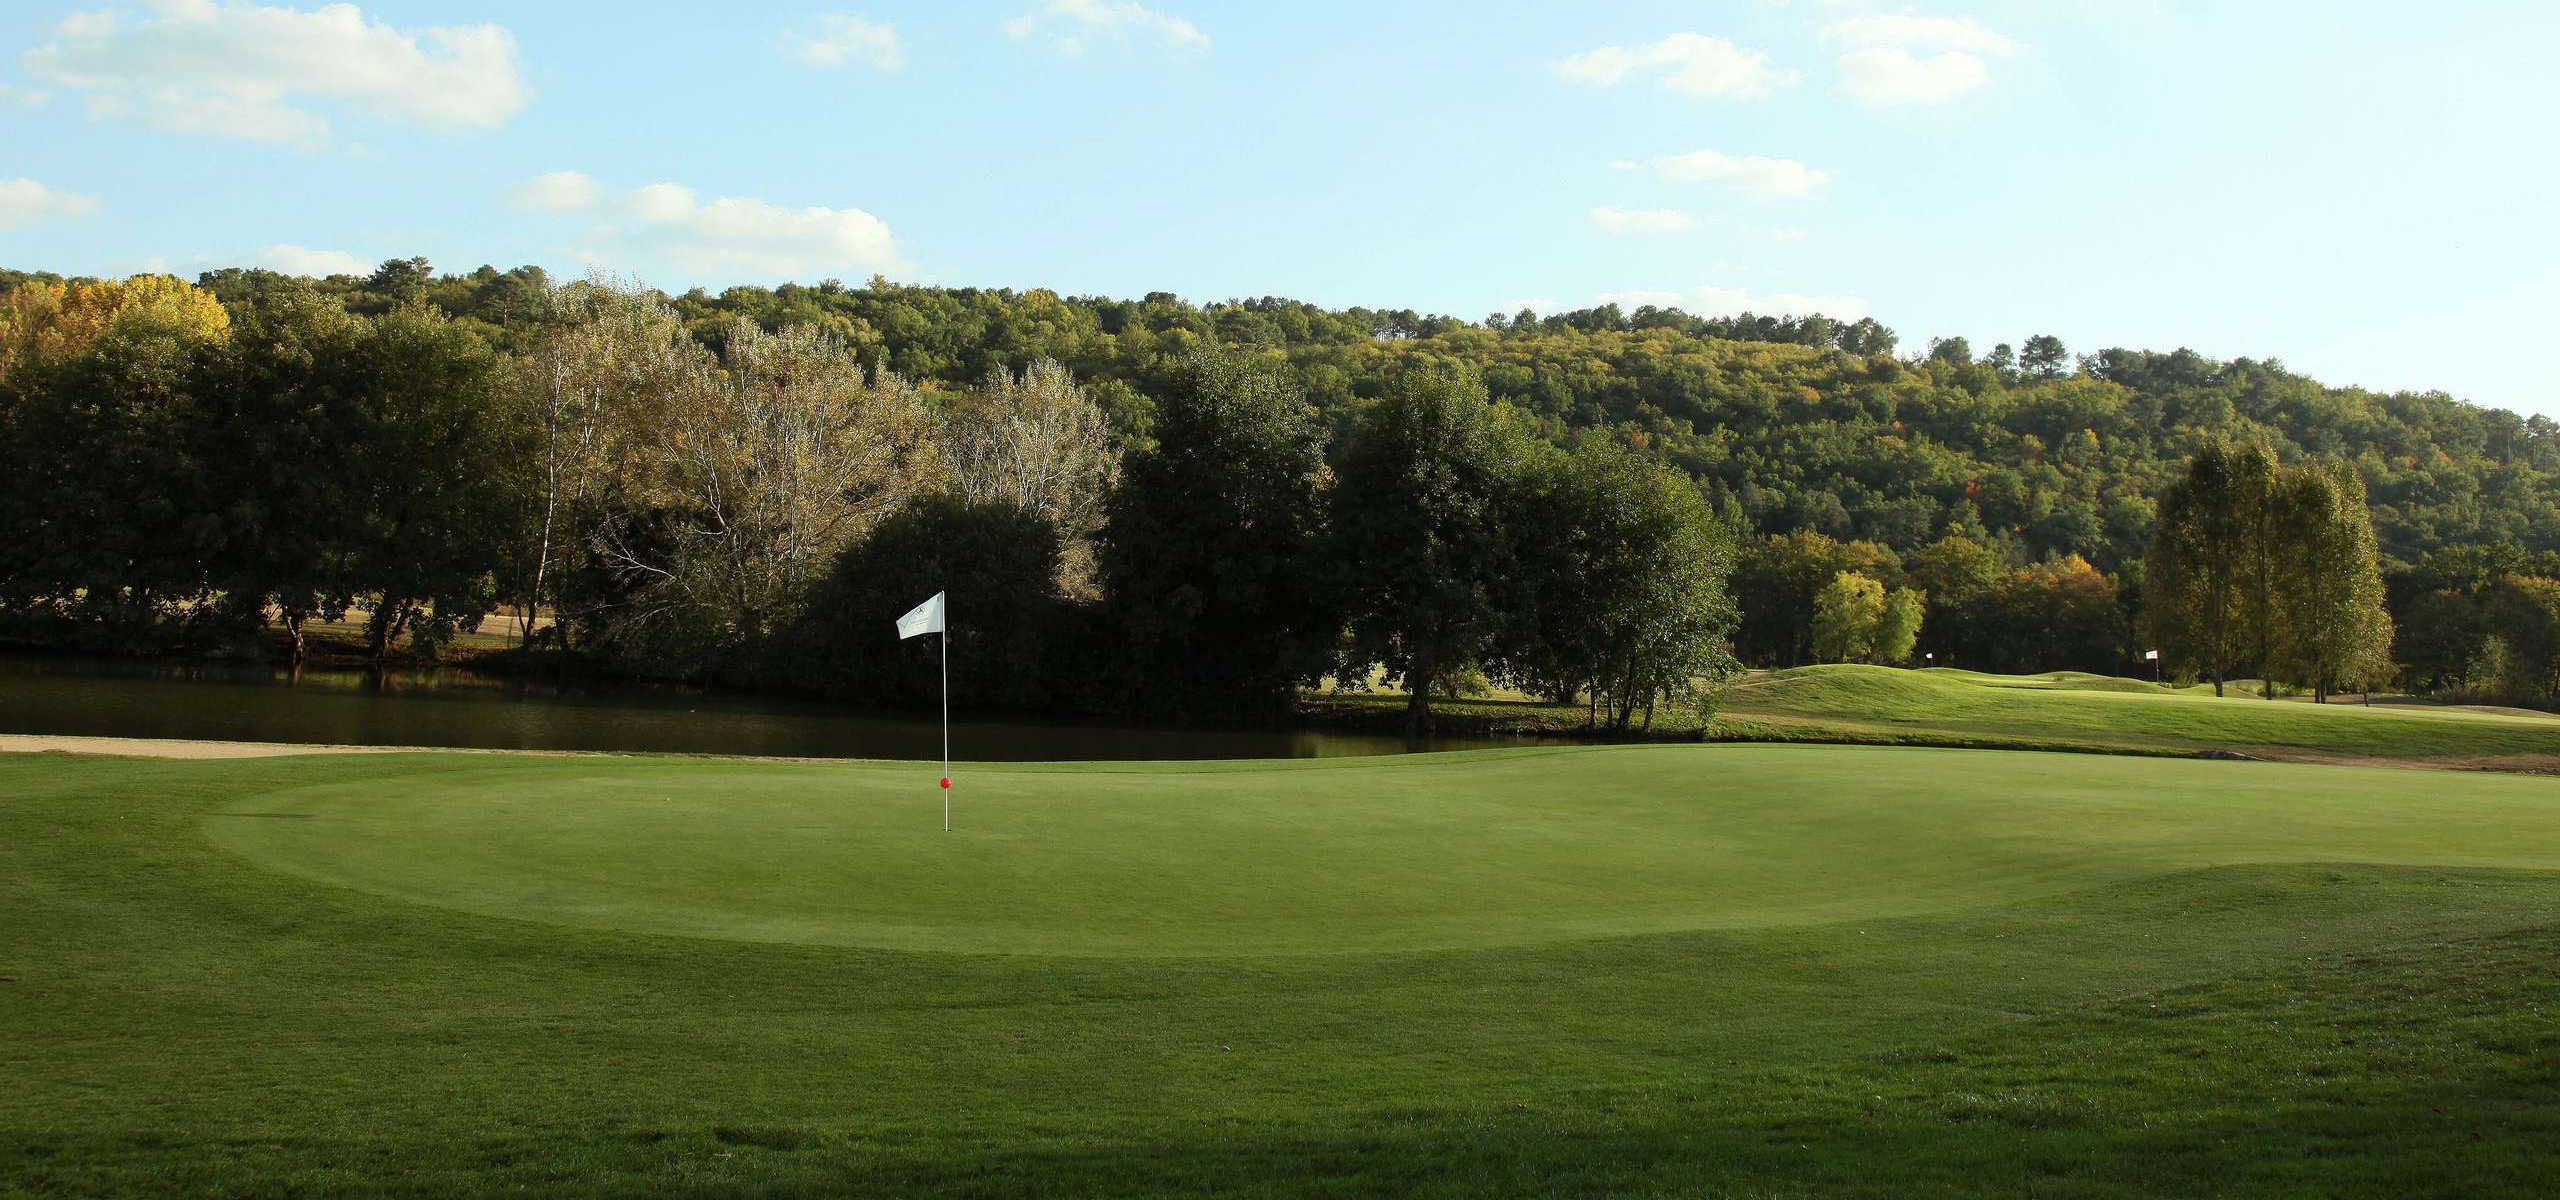 {Golf Club de Périgueux} Welcome to Périgueux Golf Club in Dordogne Périgord